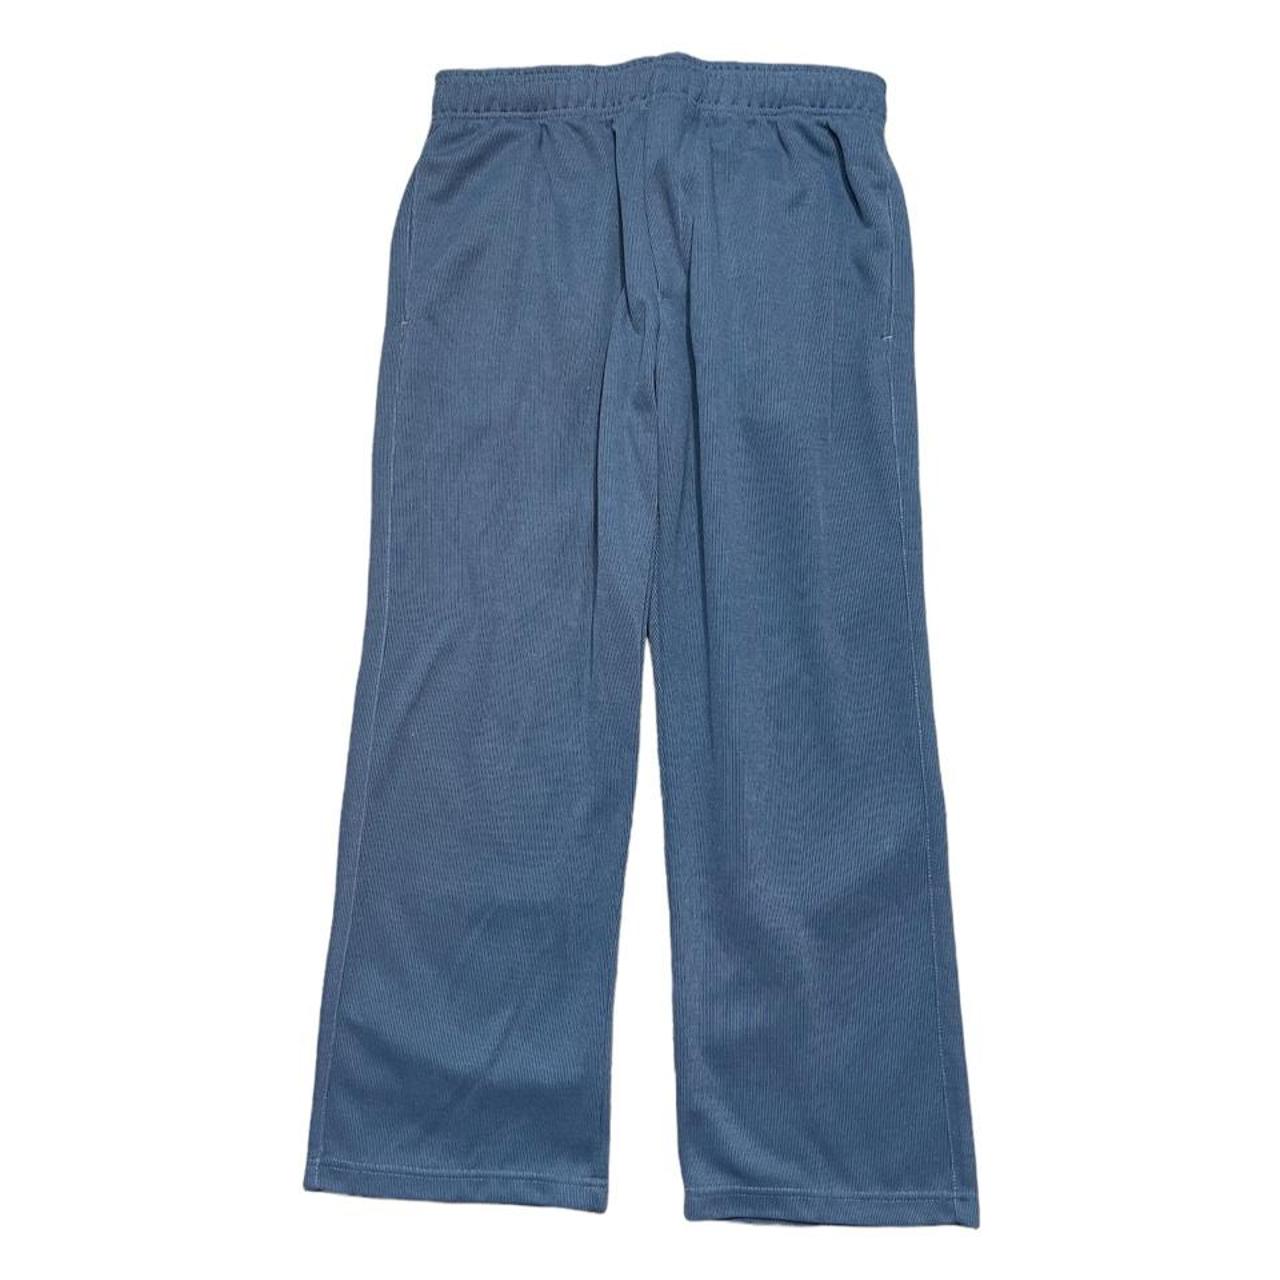 Vintage Haband Active Joe Blue Pants Size -... - Depop